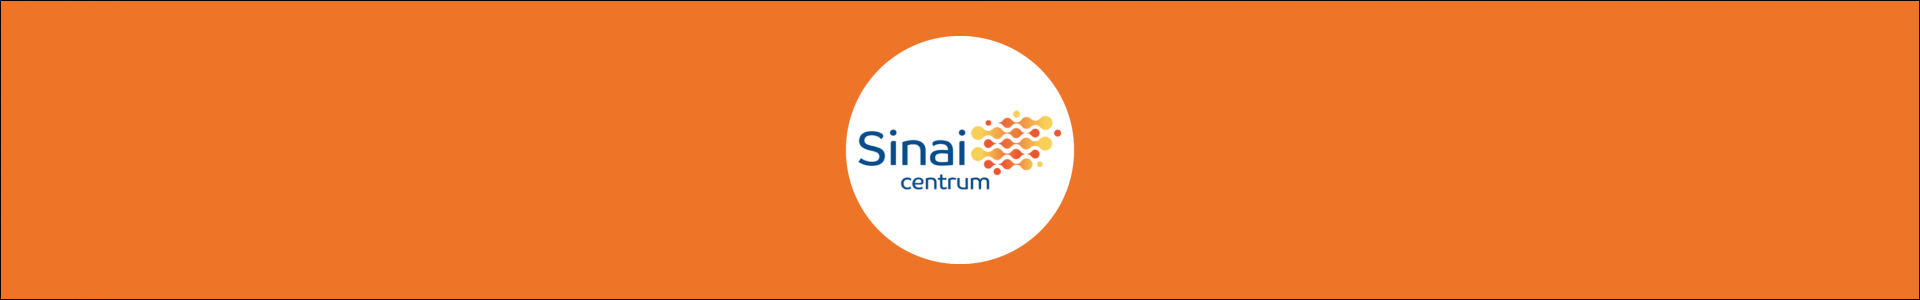 Sinai centrum